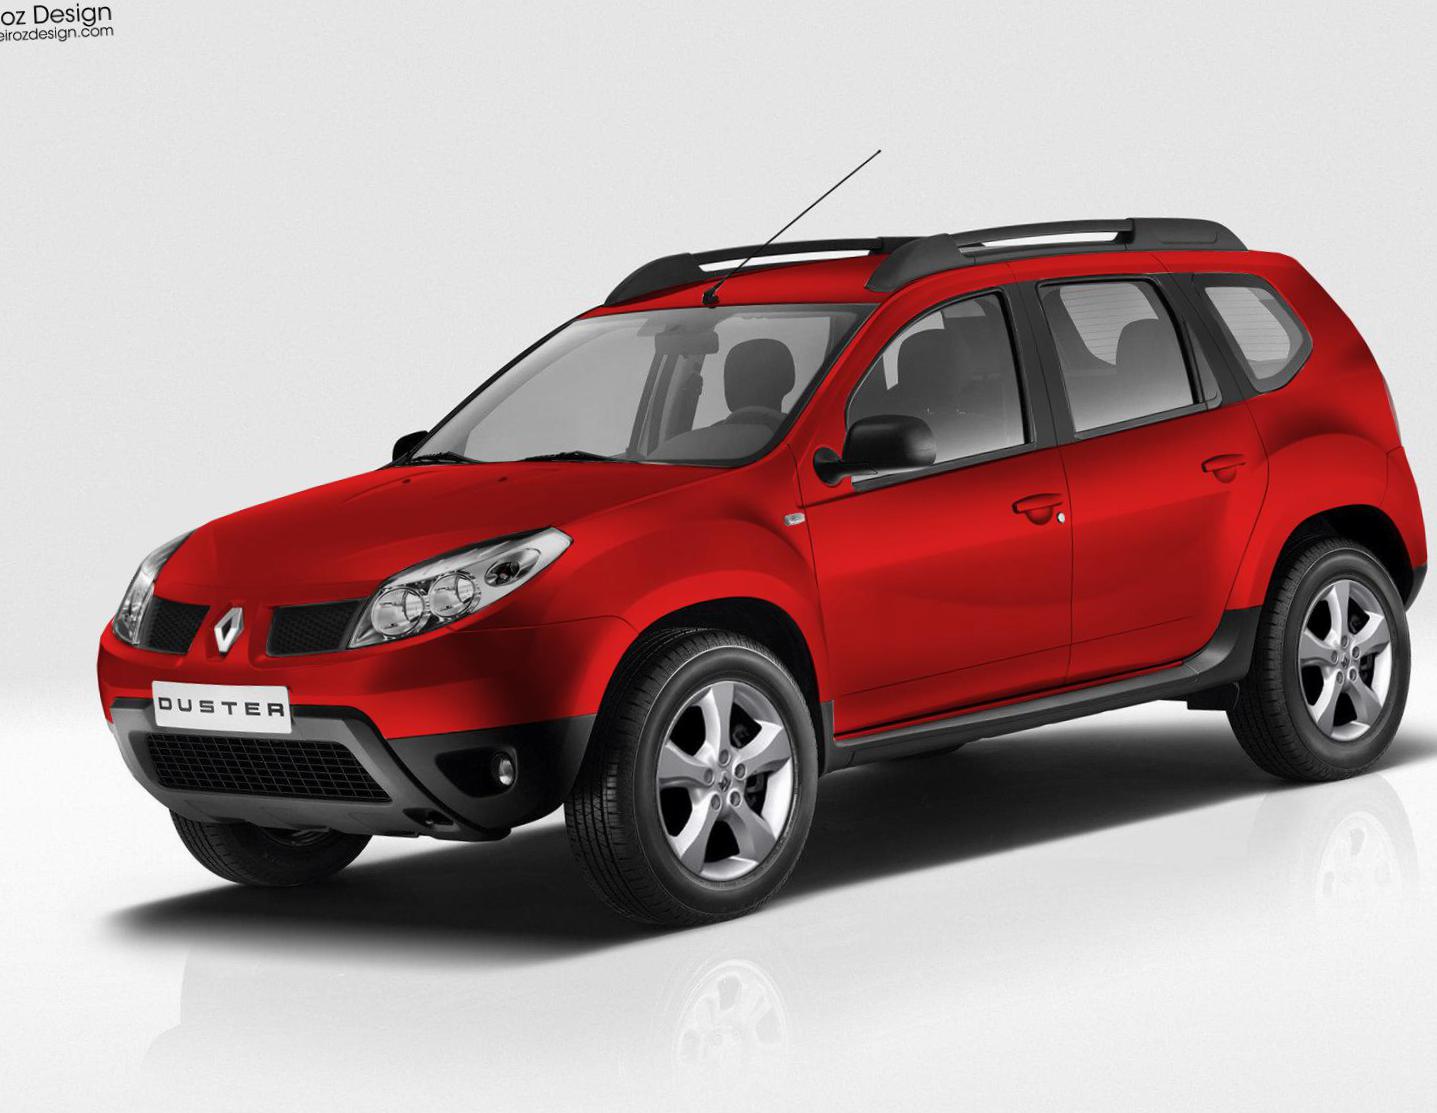 Duster Renault price liftback